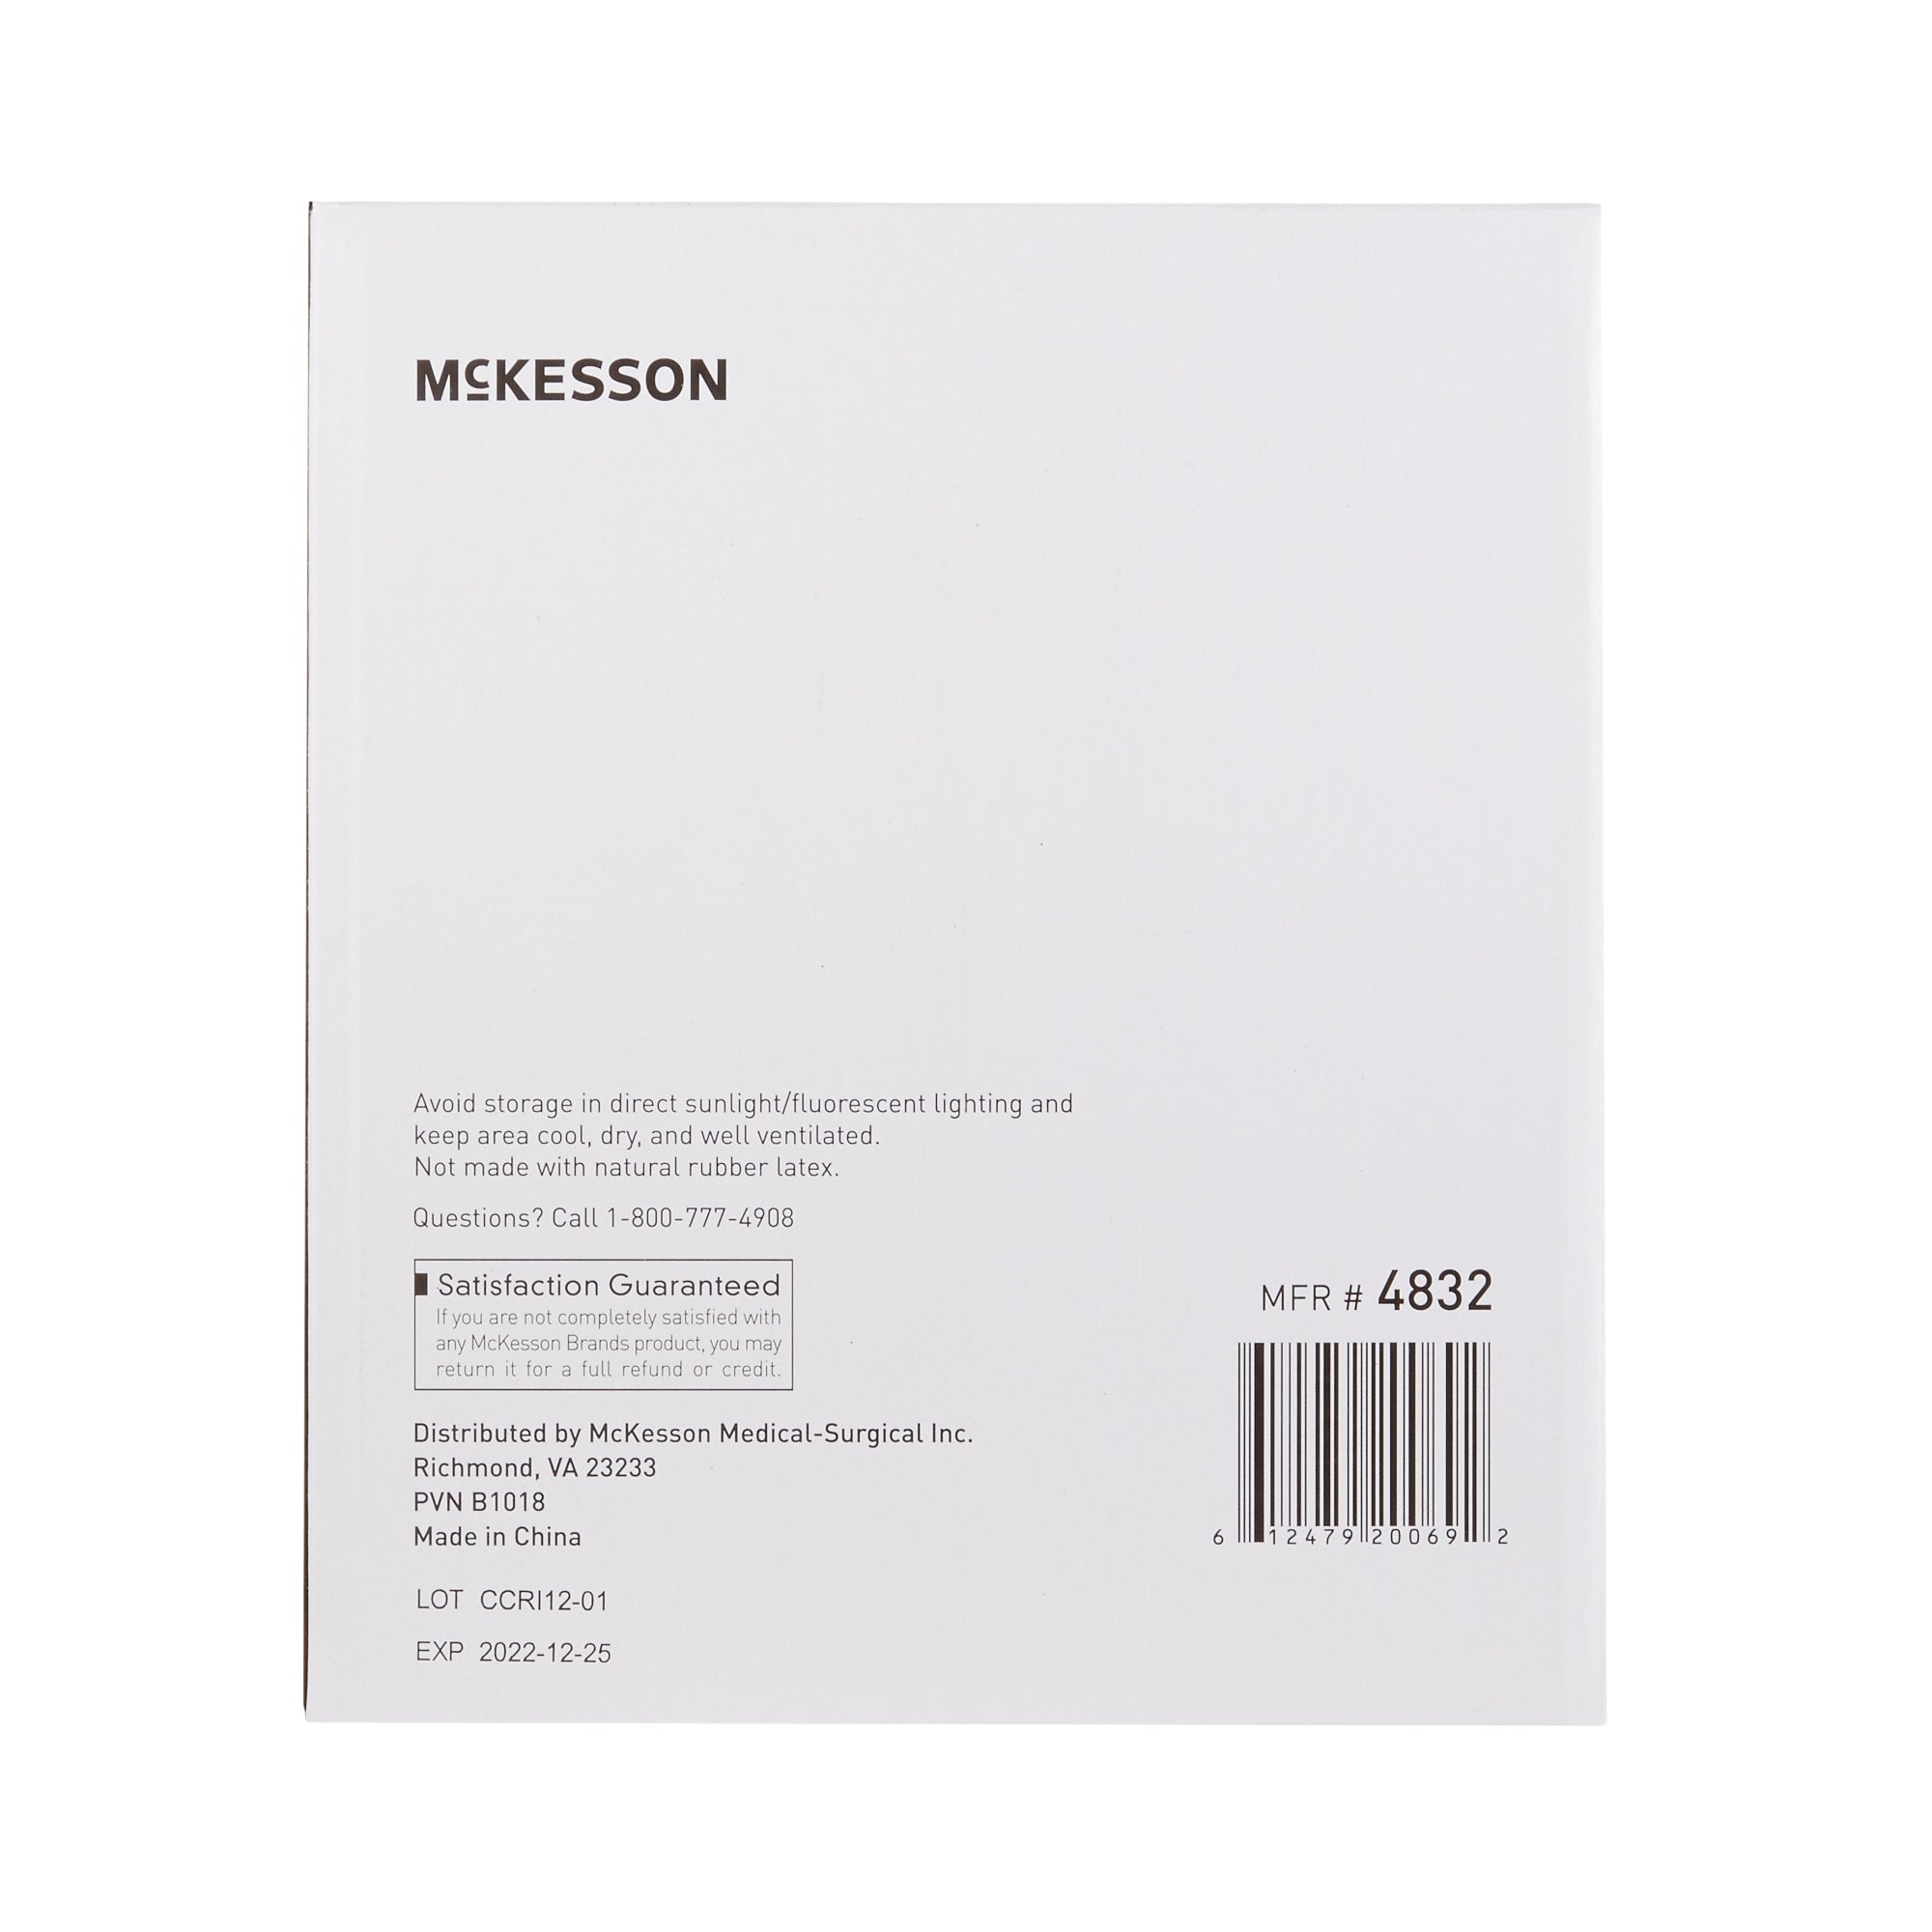 McKesson Oral Swabsticks, Untreated Foam Tip, Dental Hygiene (250-Pack)